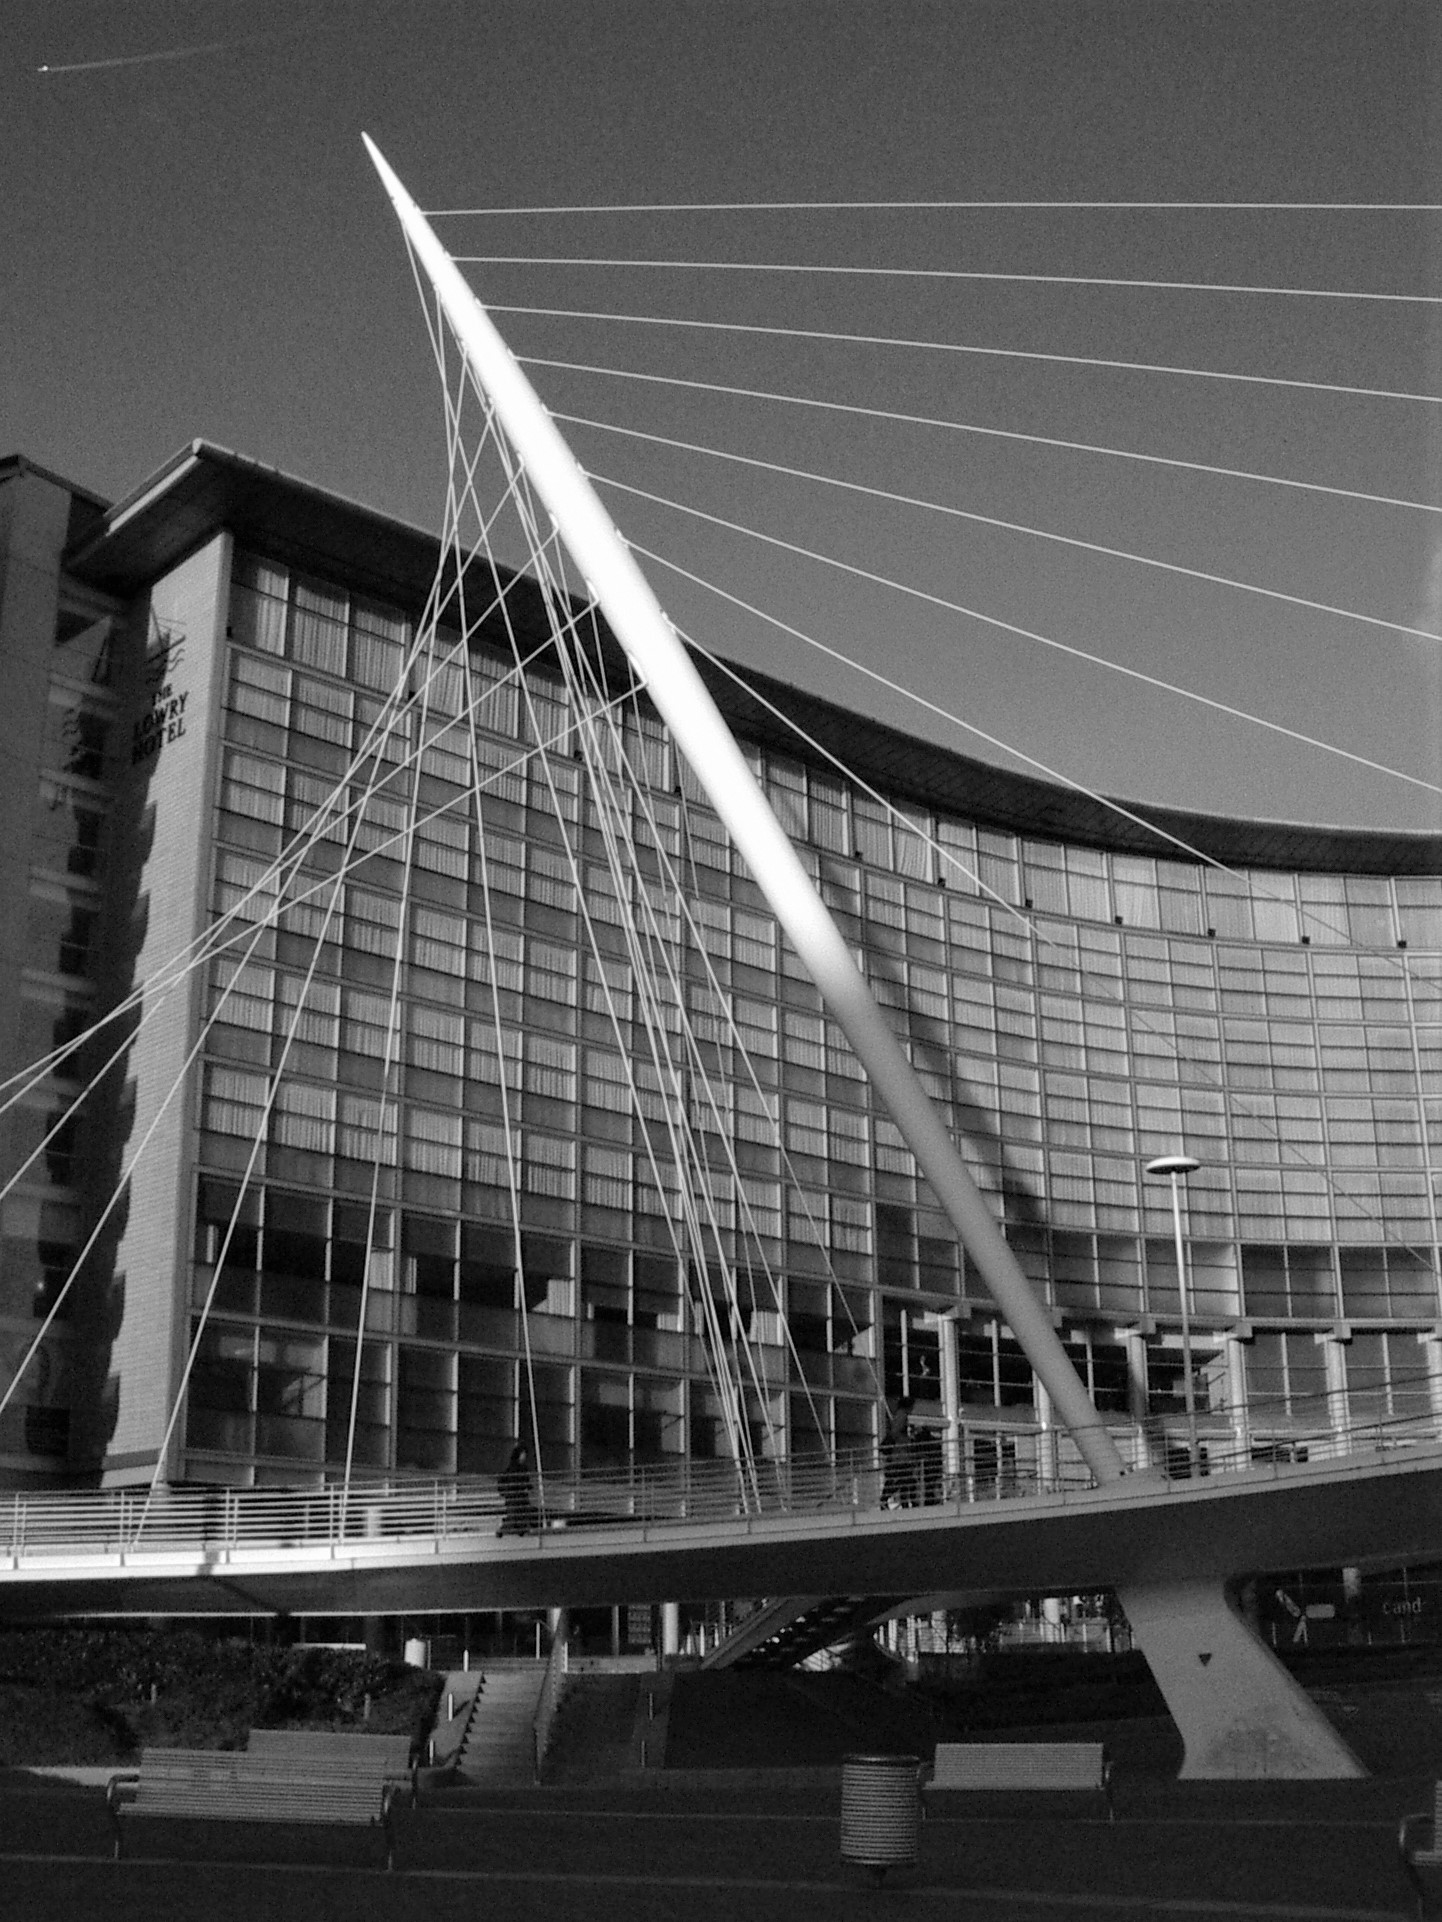 Reflections on trinitybridge, Manchester, 2008